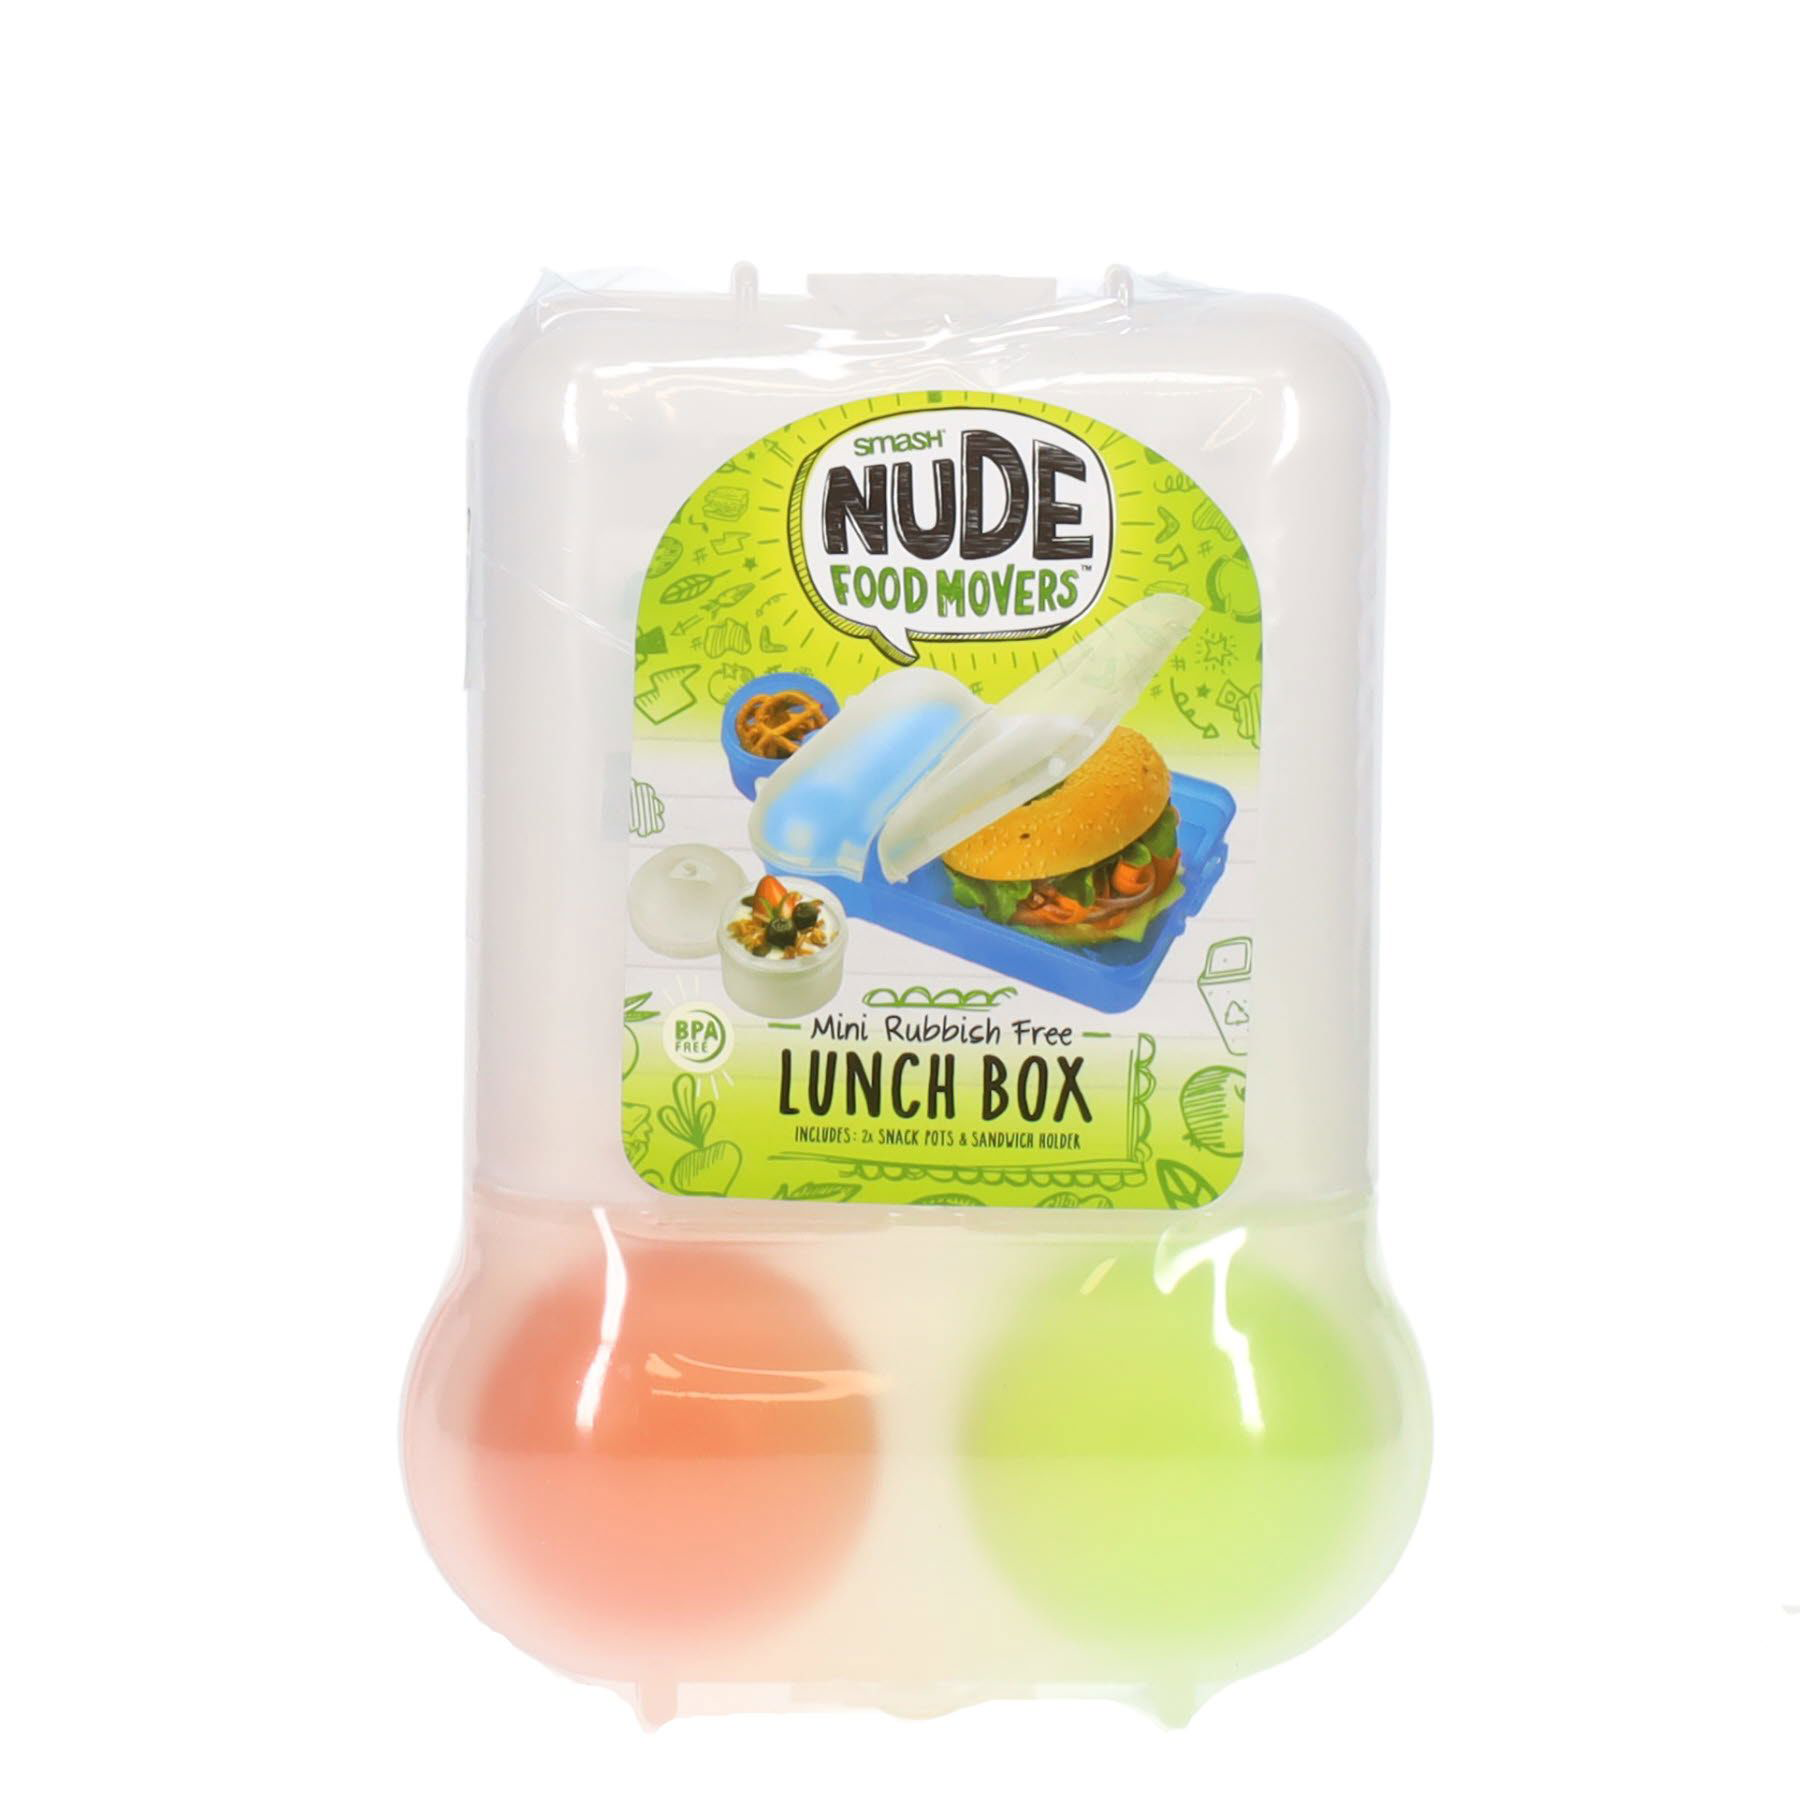 Mini Rubbish Free Lunchbox Set Cdu